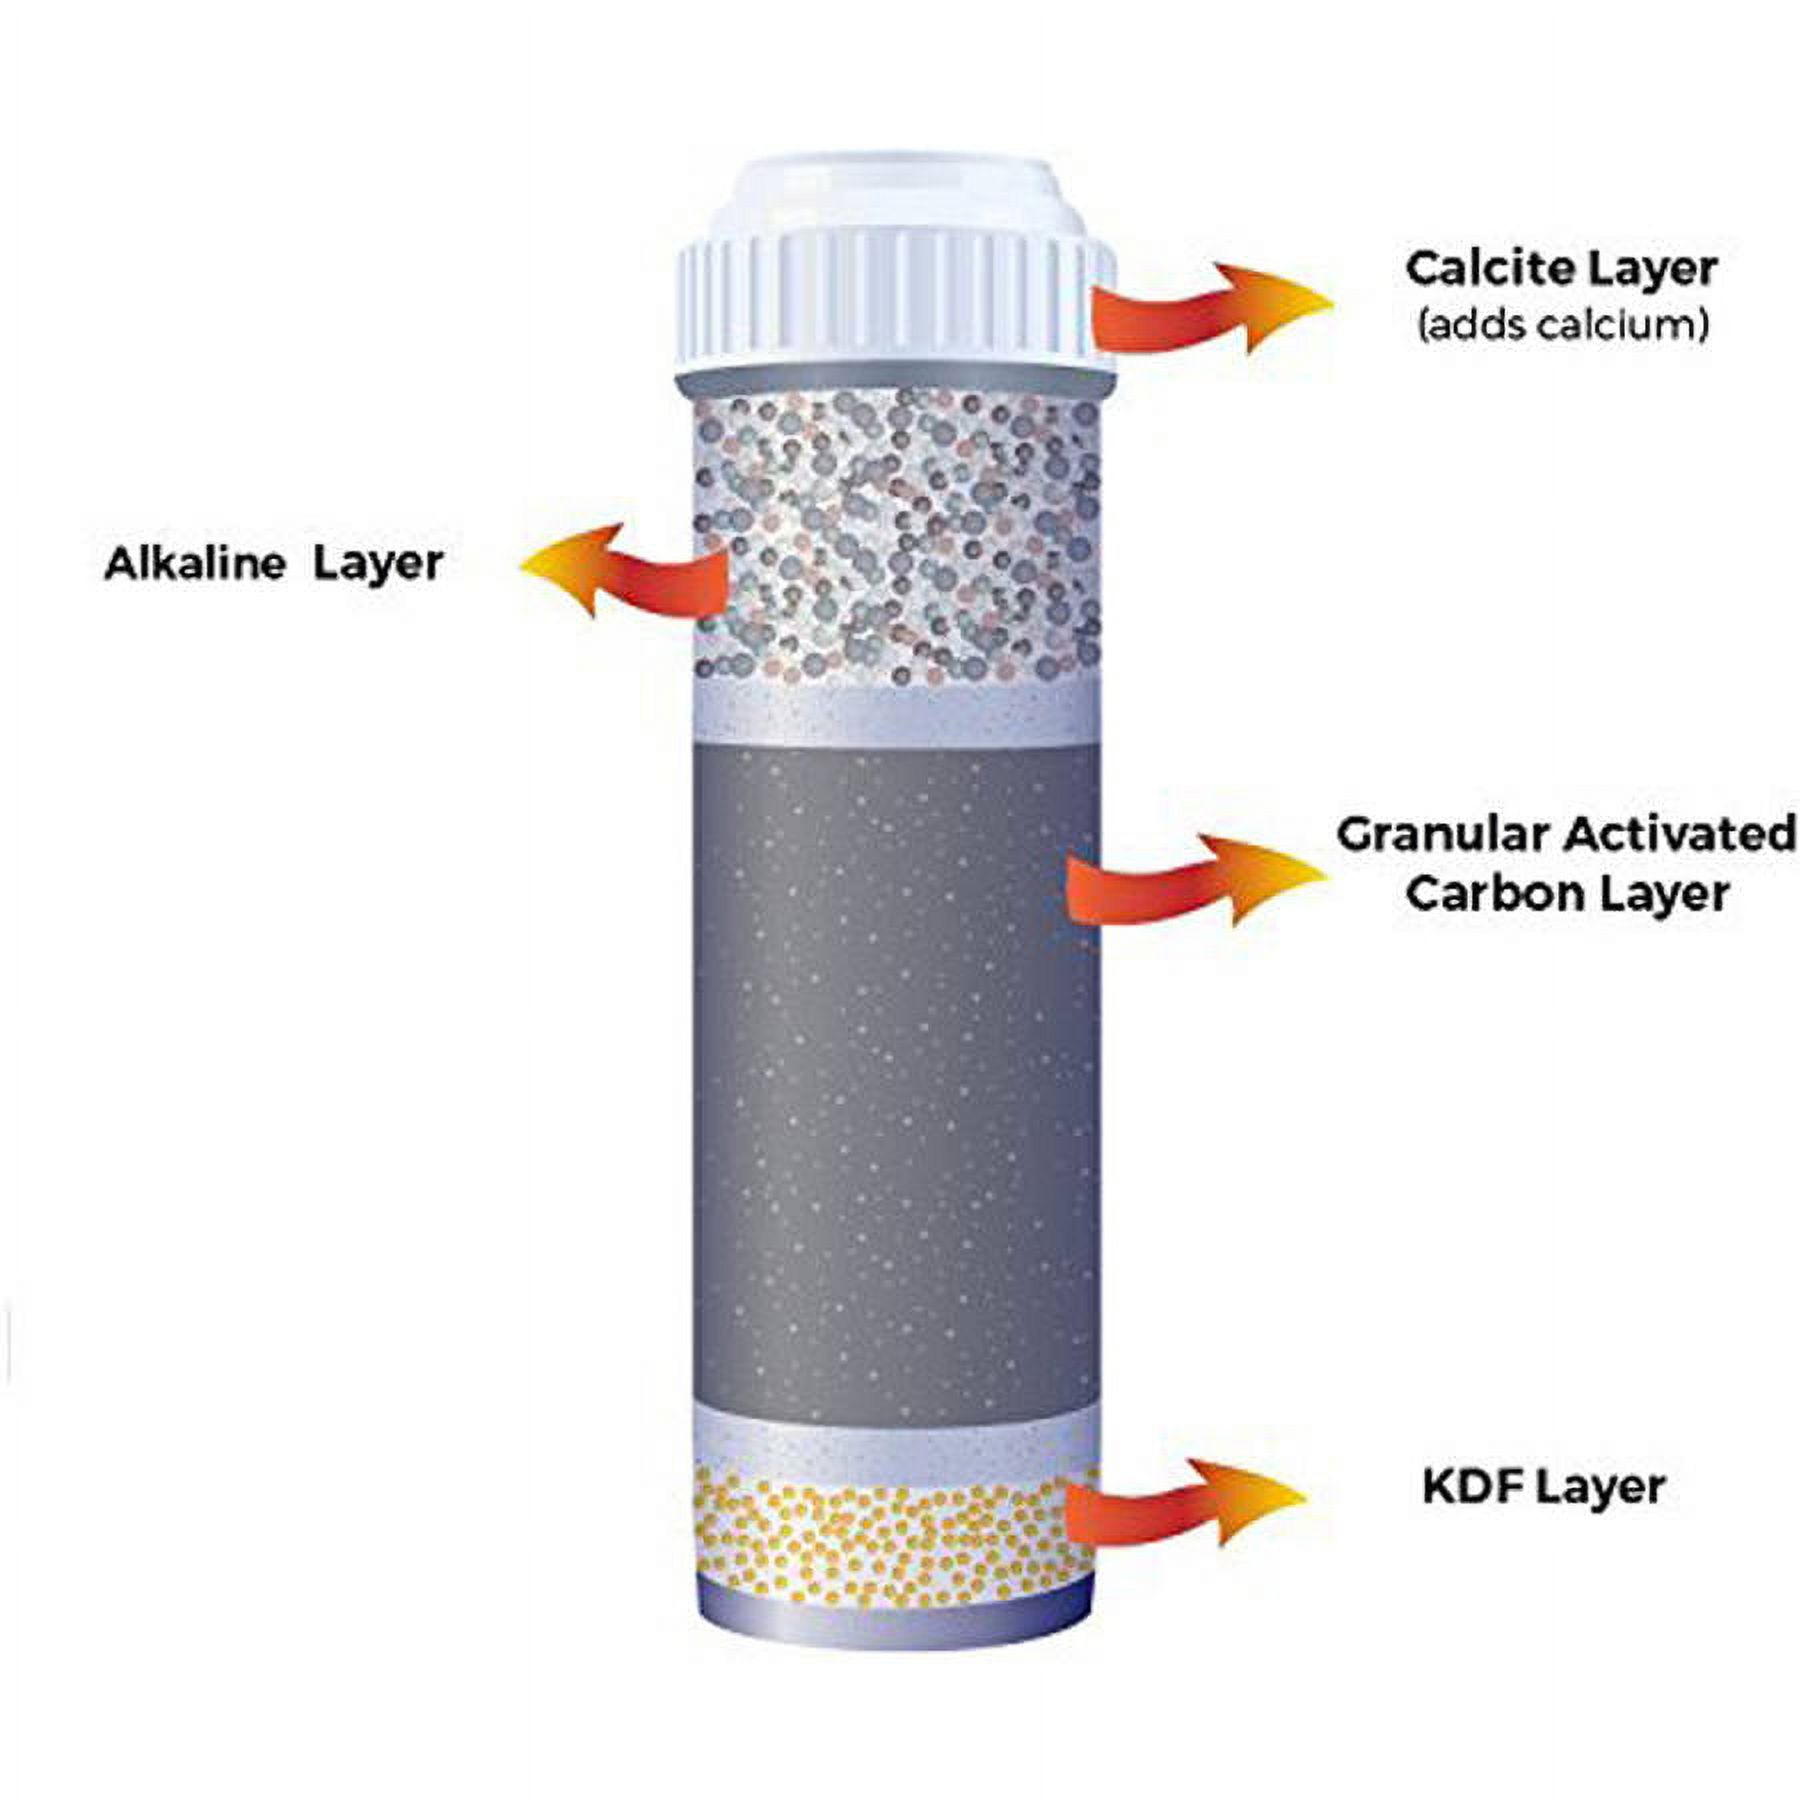 APEX RF-1050 Alkaline Filter Cartridge - image 3 of 4